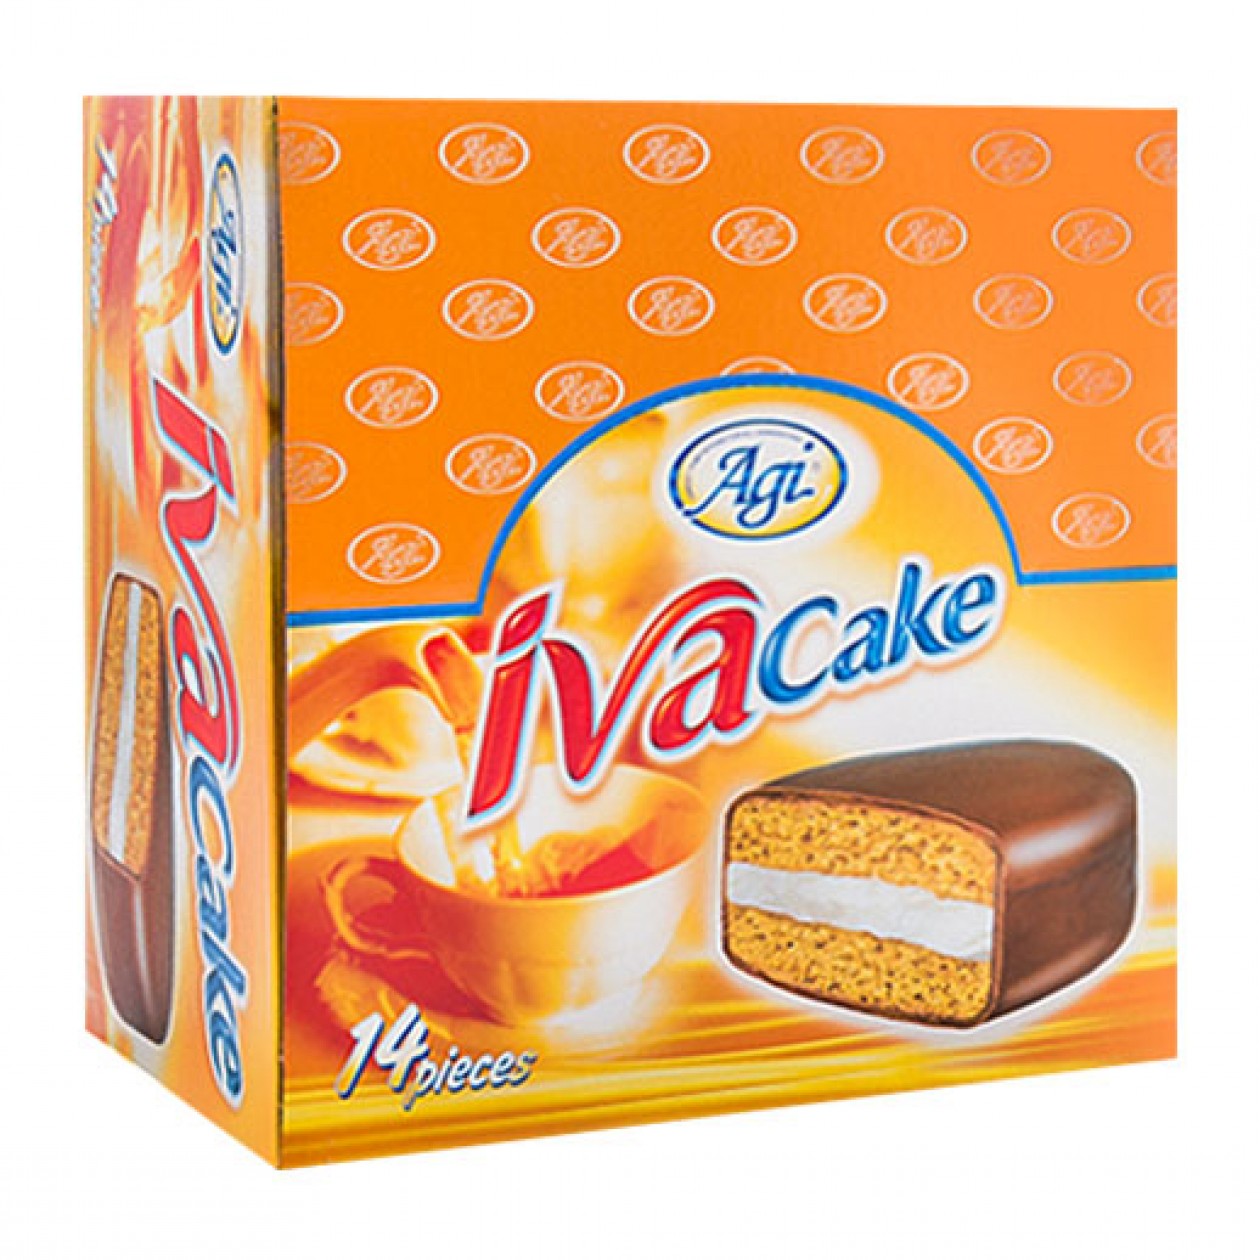 Agi Napoleon Iva Cake 14x80g